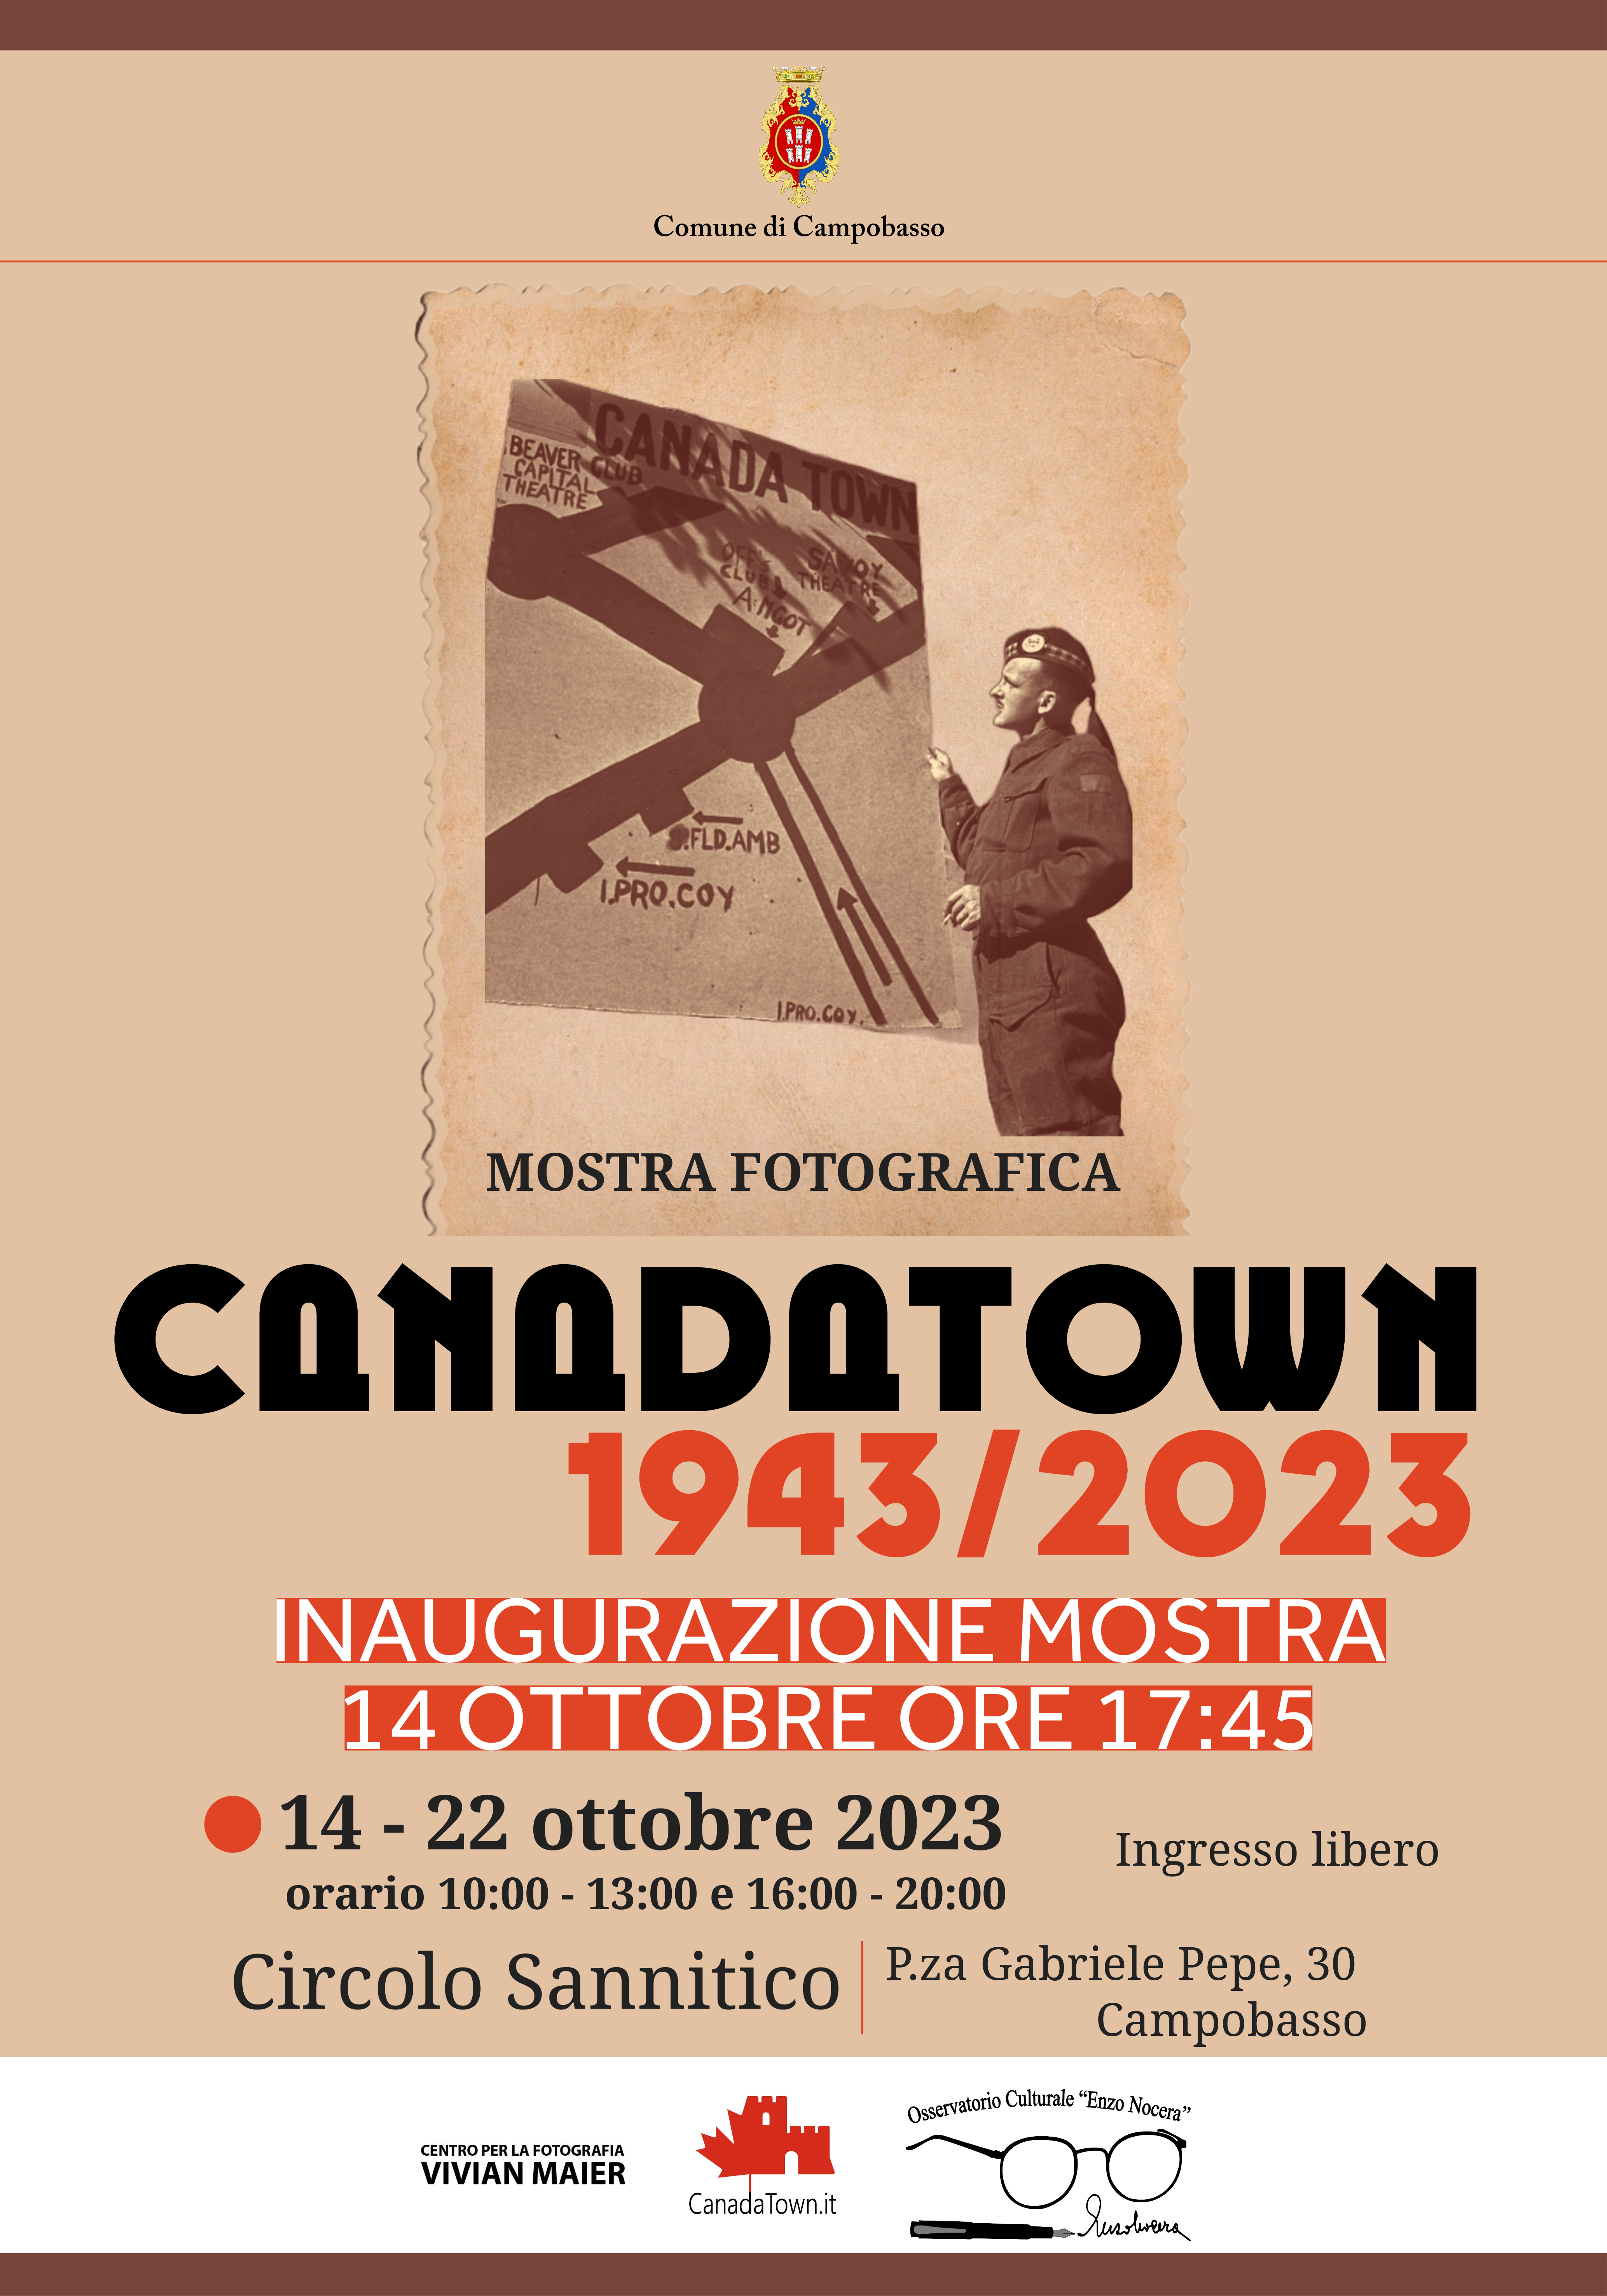 CANADATOWN 1943/2023